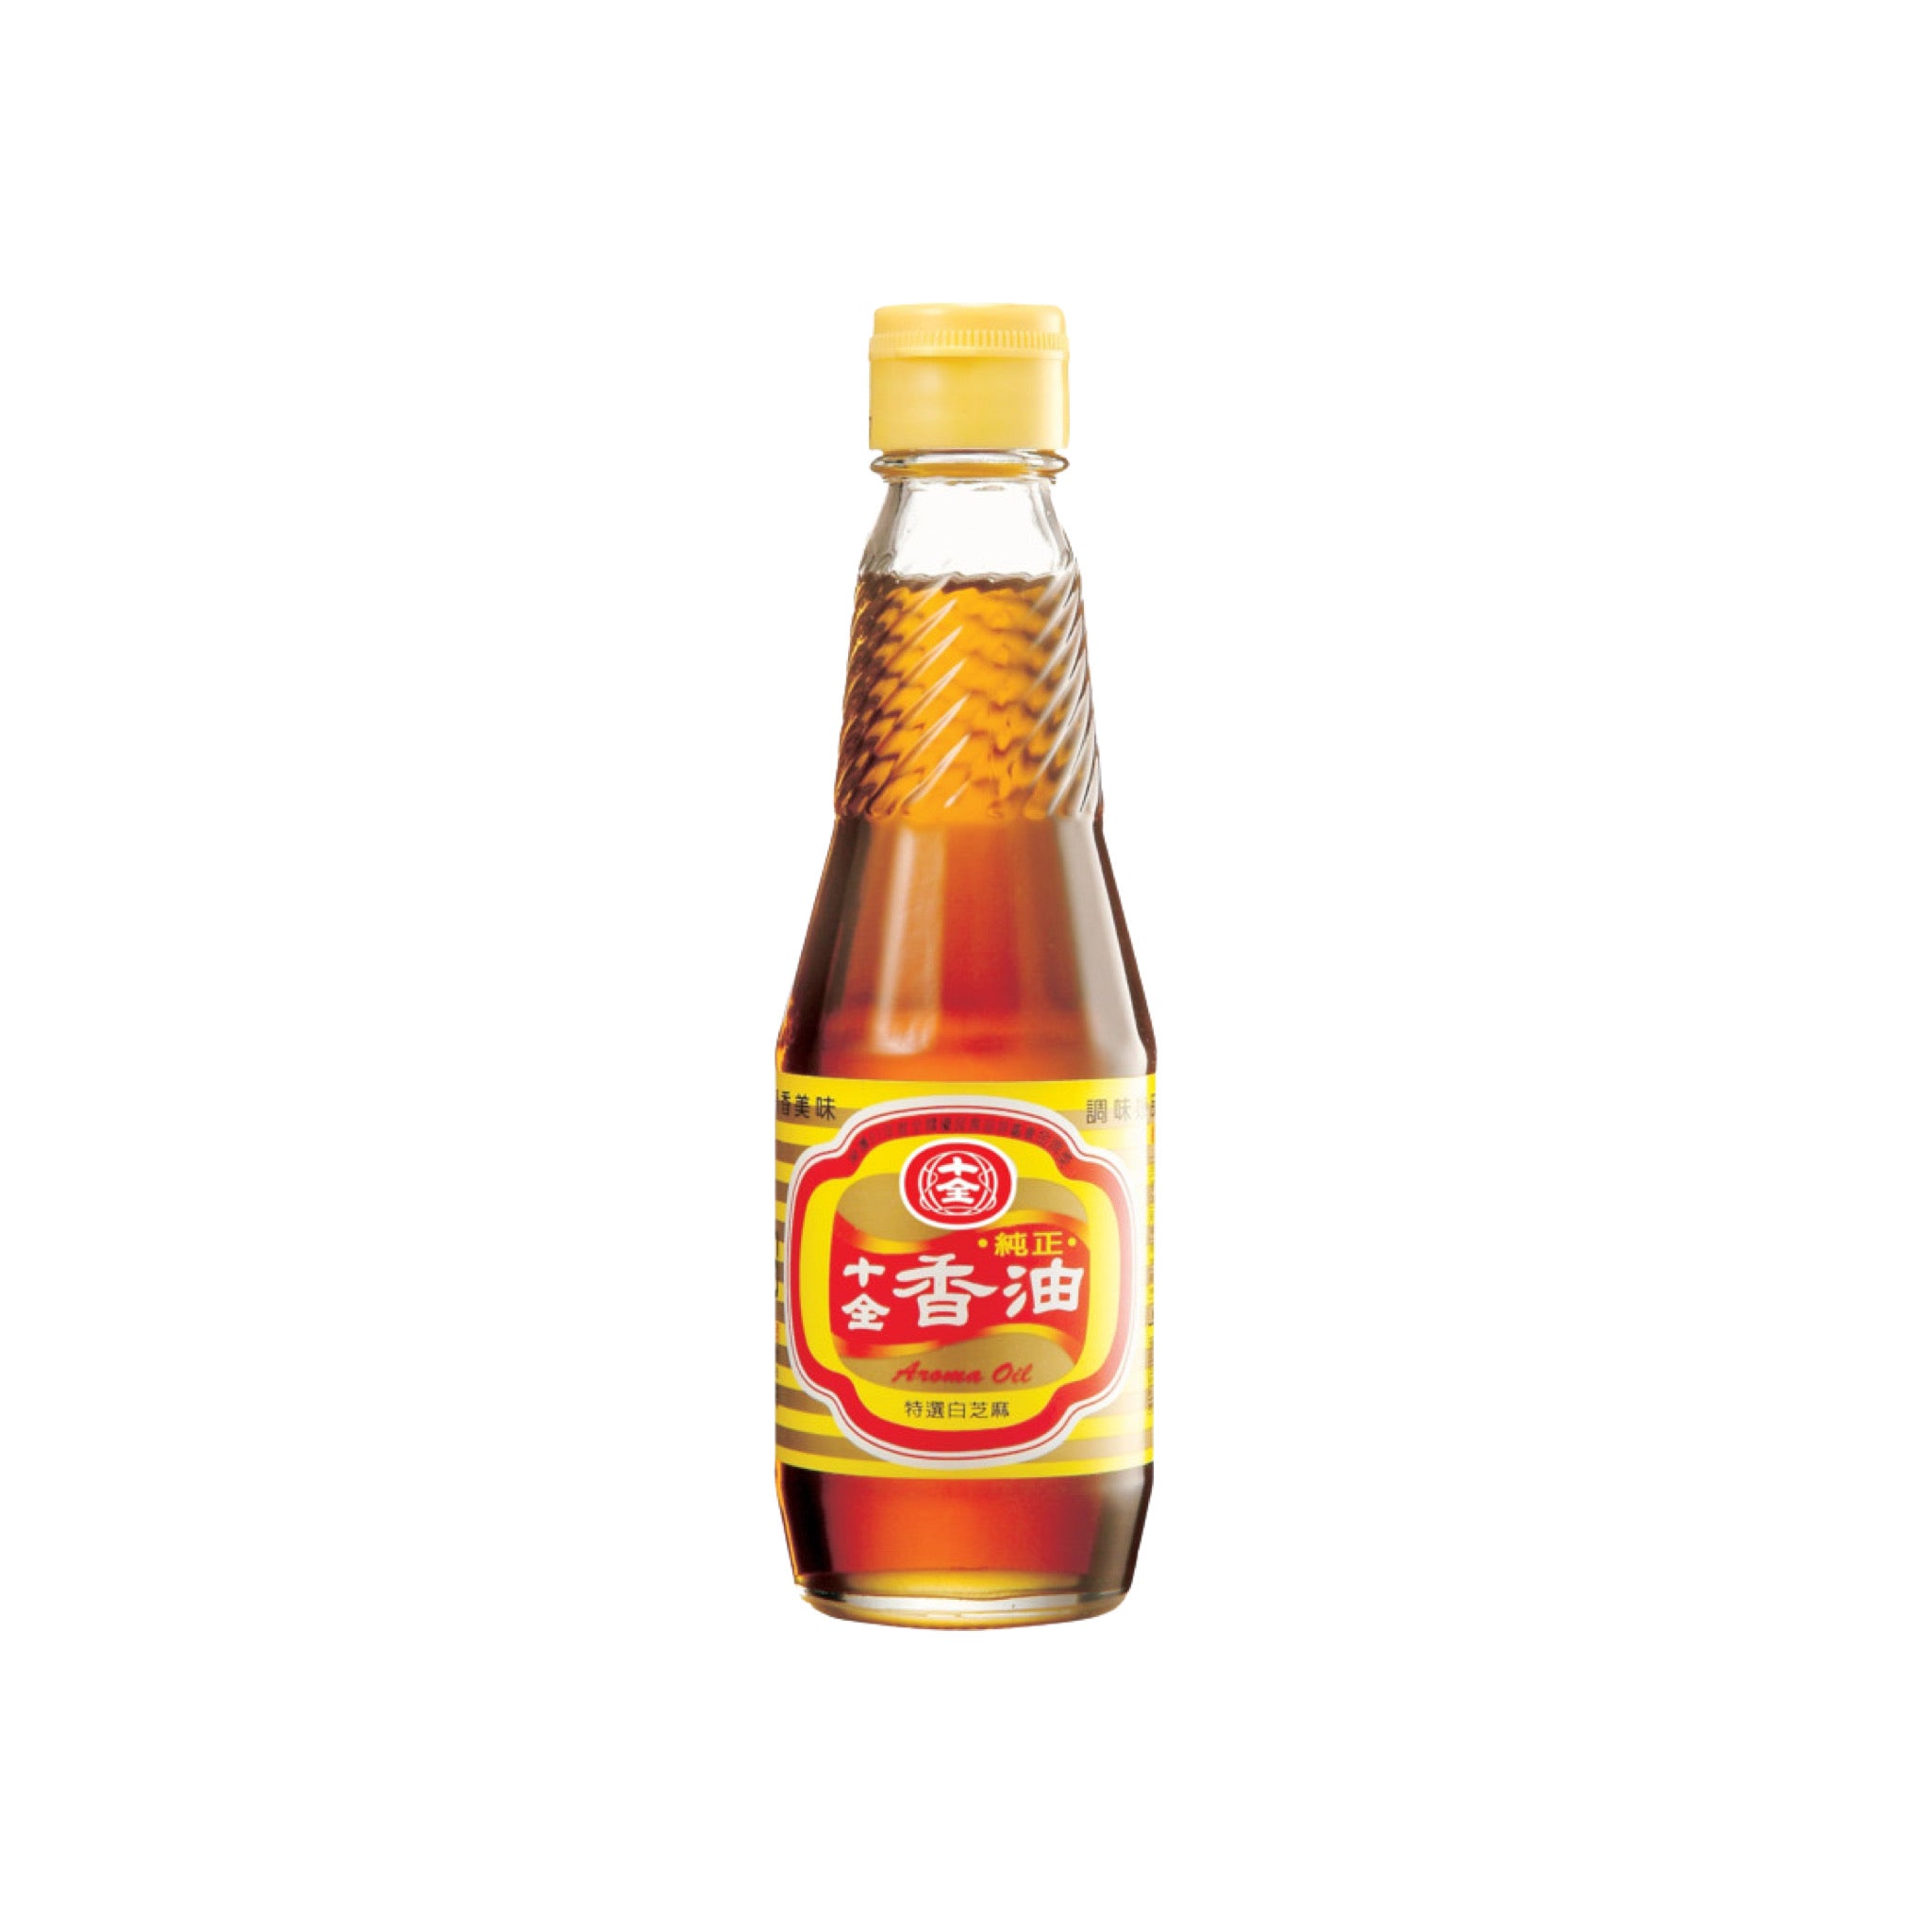 SHIH CHUAN Sesame oil 十全純正香油 | Matthew's Foods Online